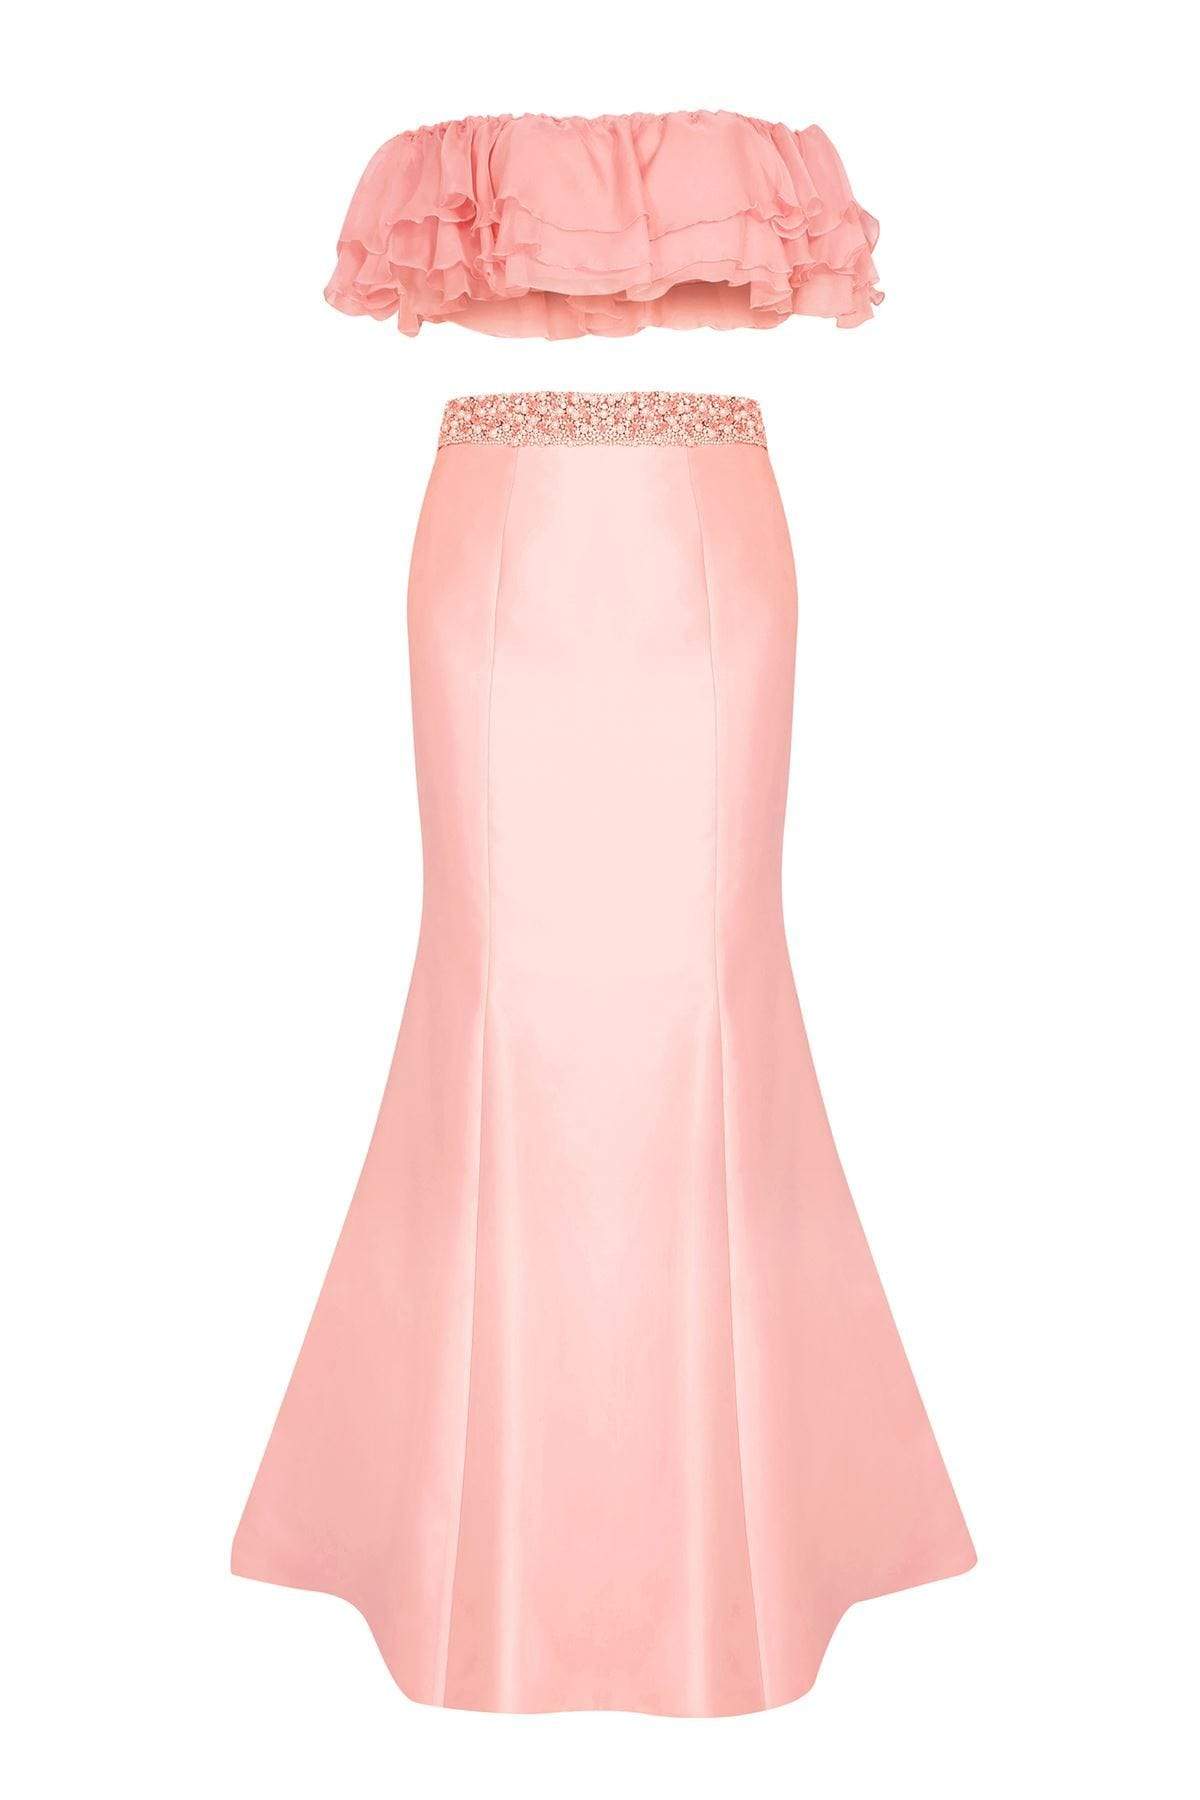 Tarik Ediz - Two-Piece Mermaid Dress 50086 Special Occasion Dress 0 / Peach Nectar